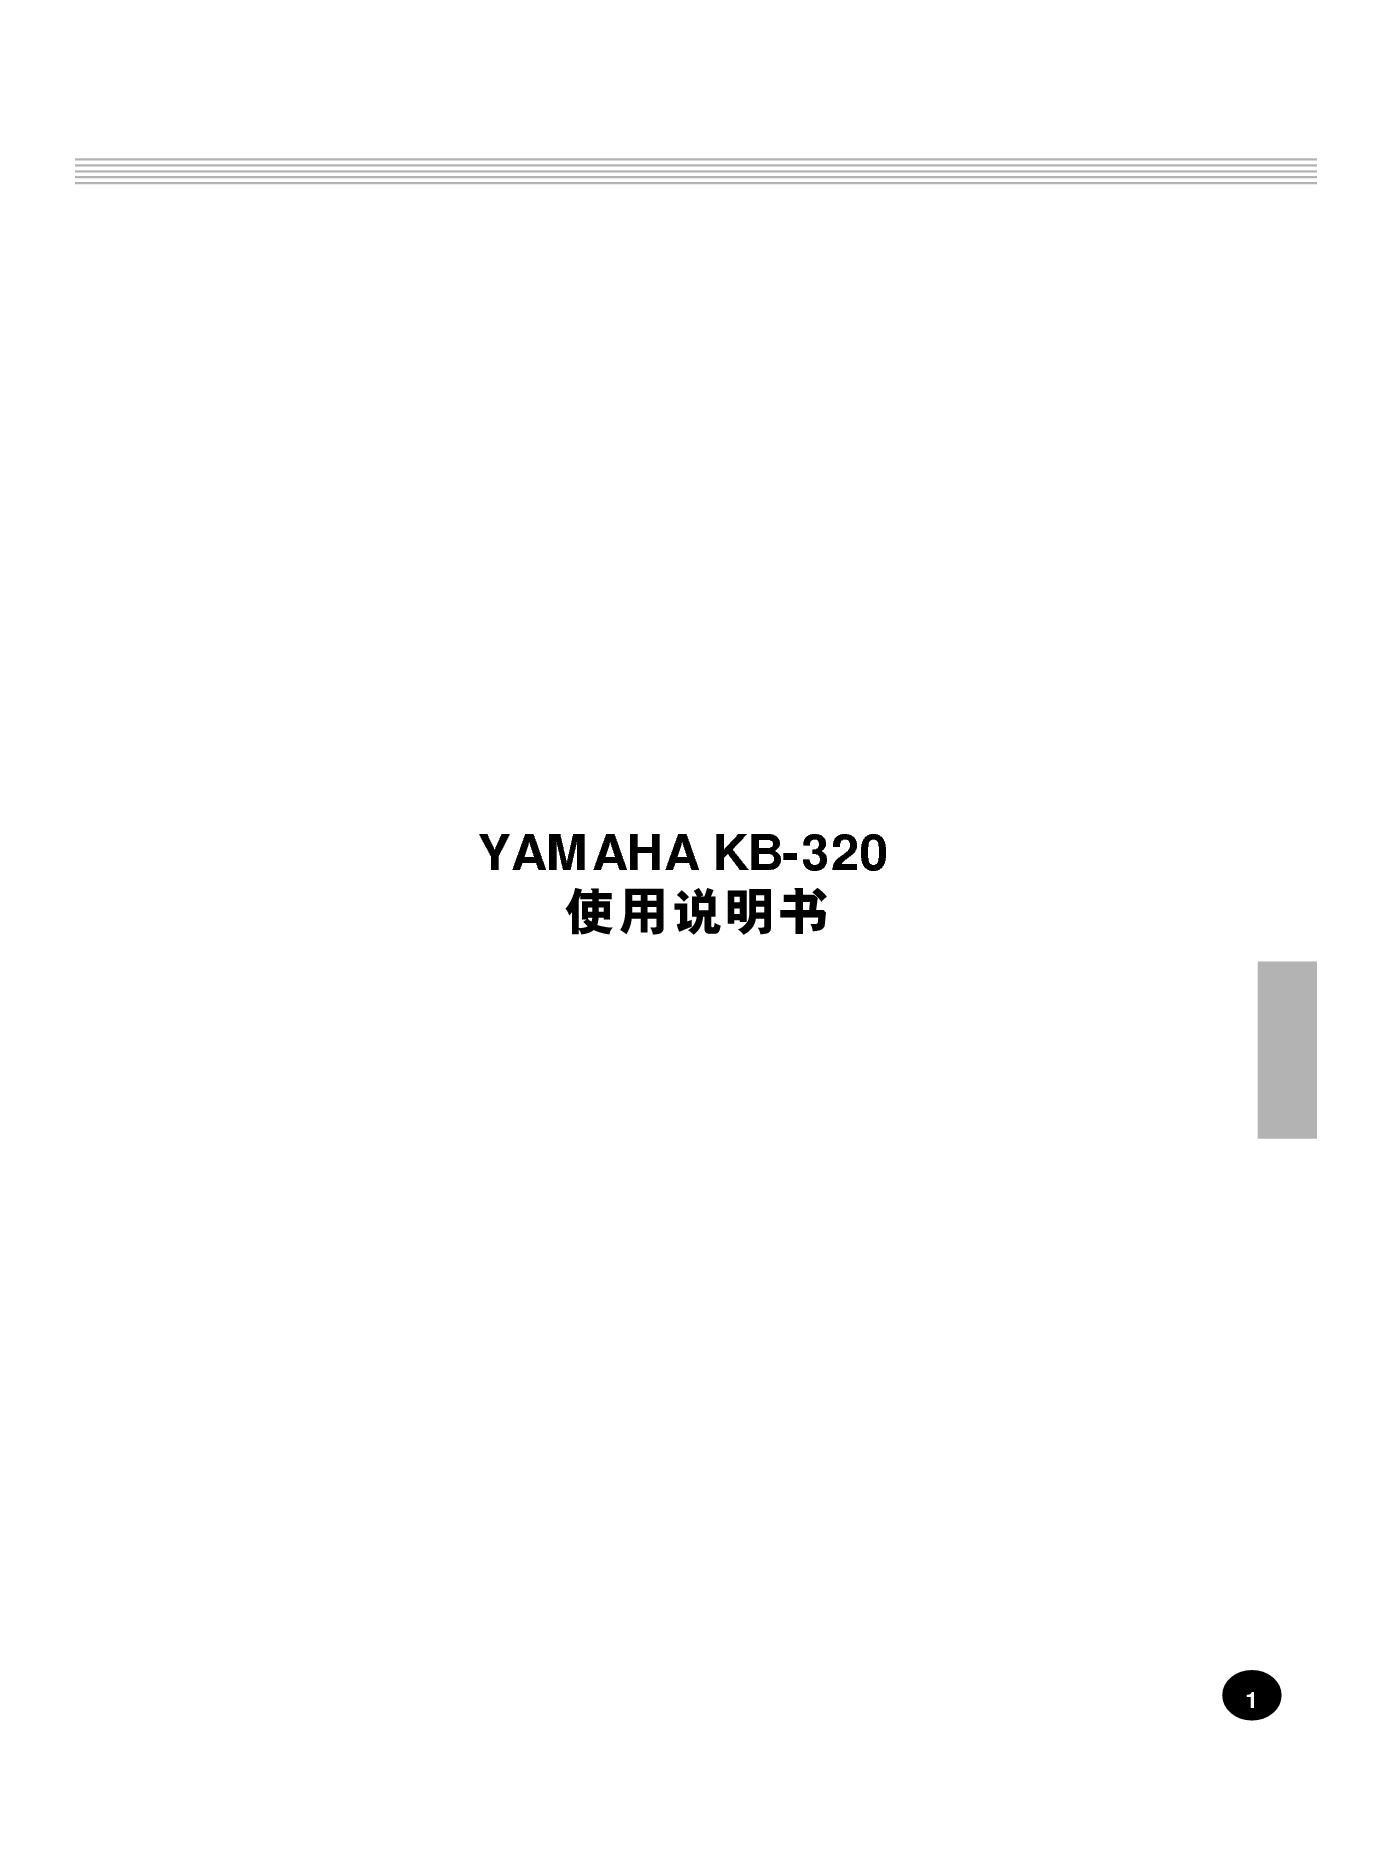 雅马哈 Yamaha KB-320 使用说明书 封面